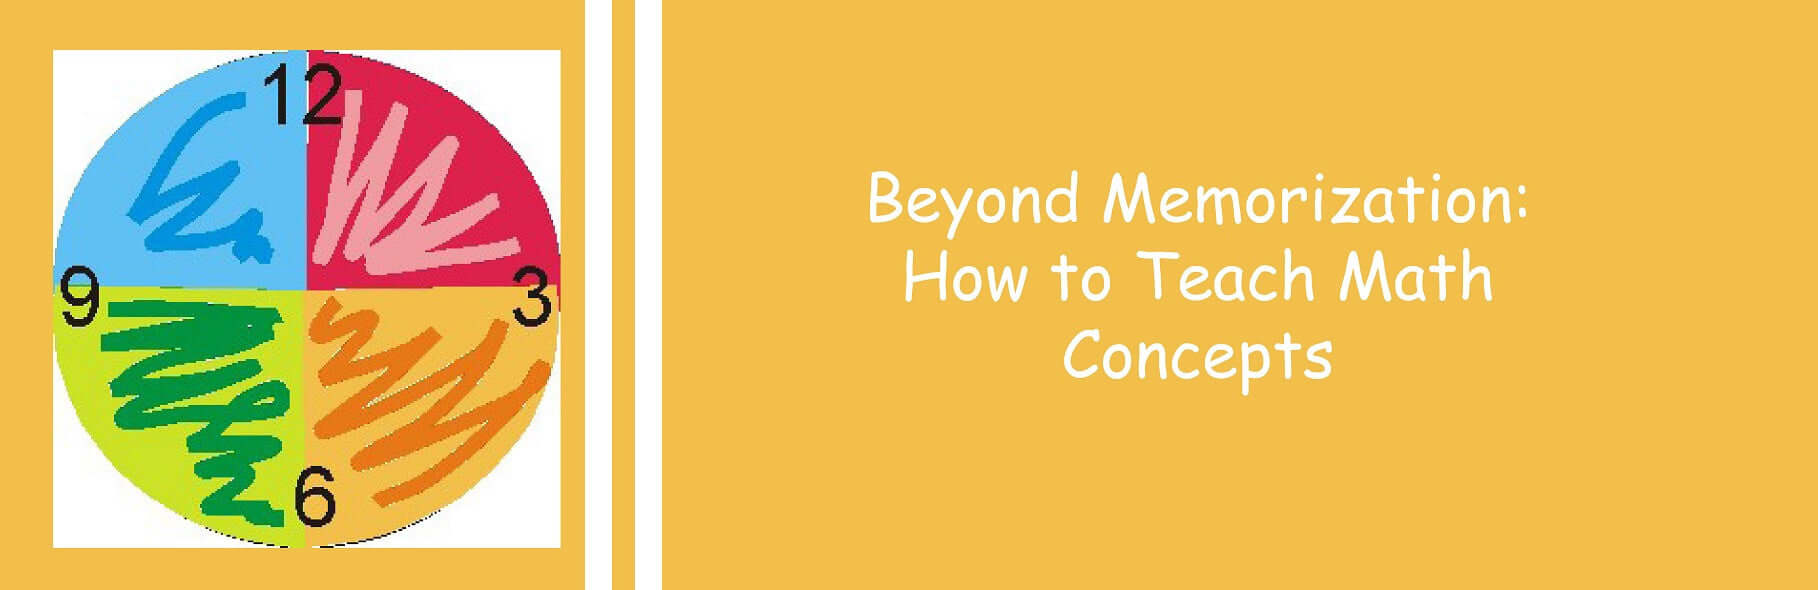 Beyond Memorization: How to Teach Math Concepts